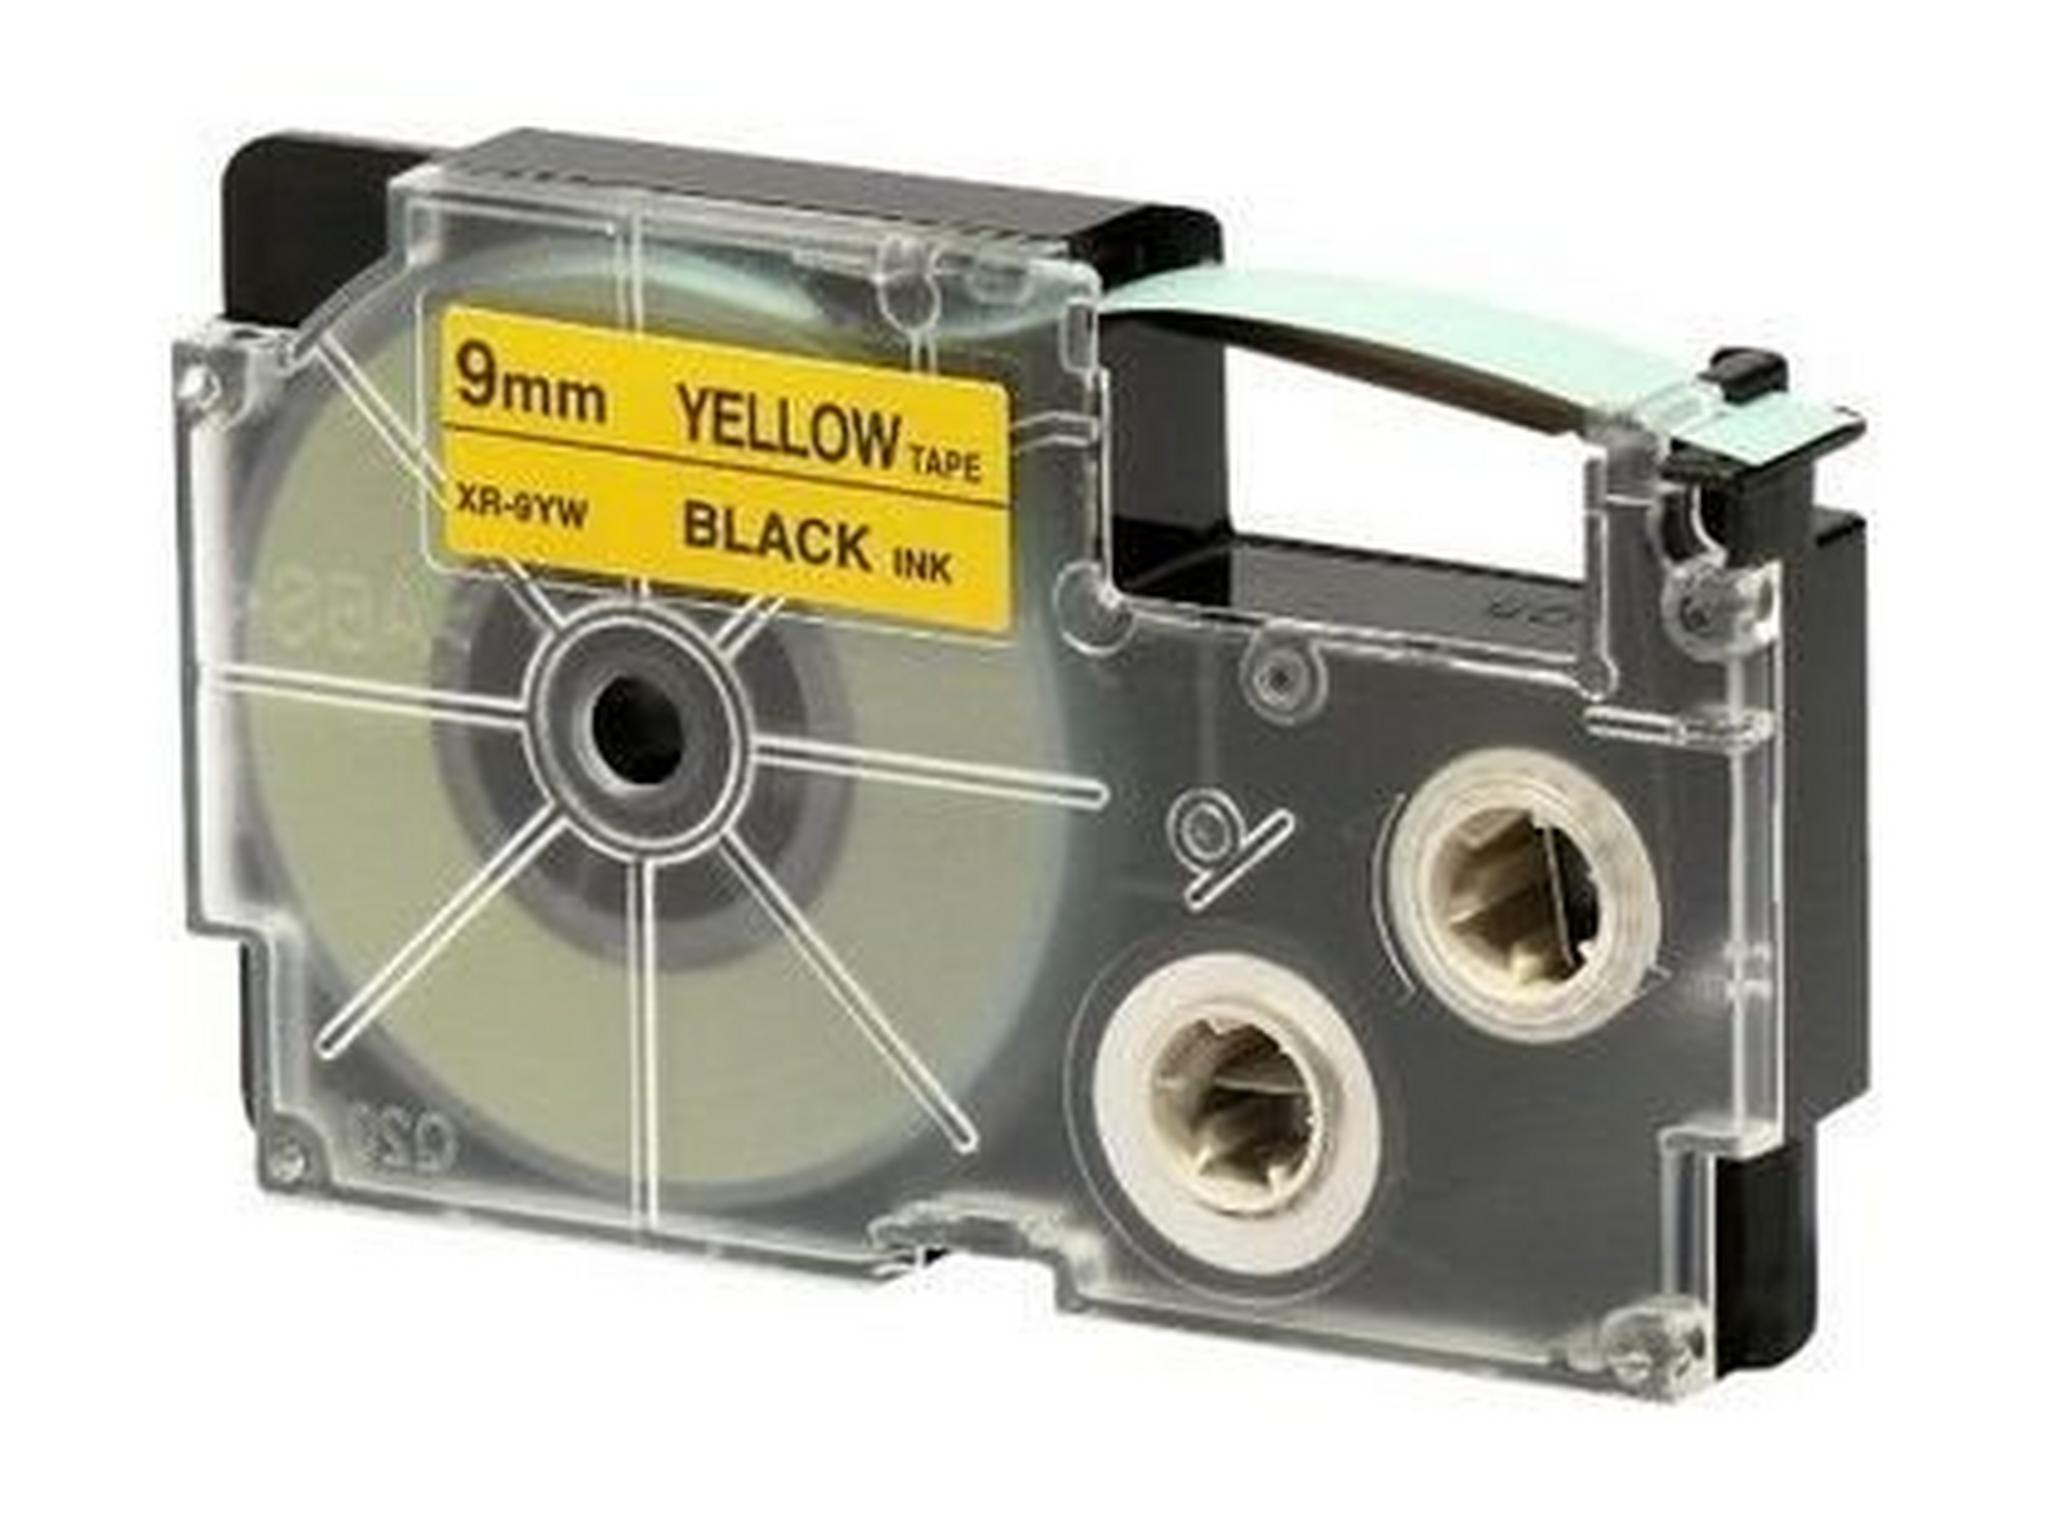 Casio 9mm Black-On-Yellow Standard Label Tape (XR-9YW1)